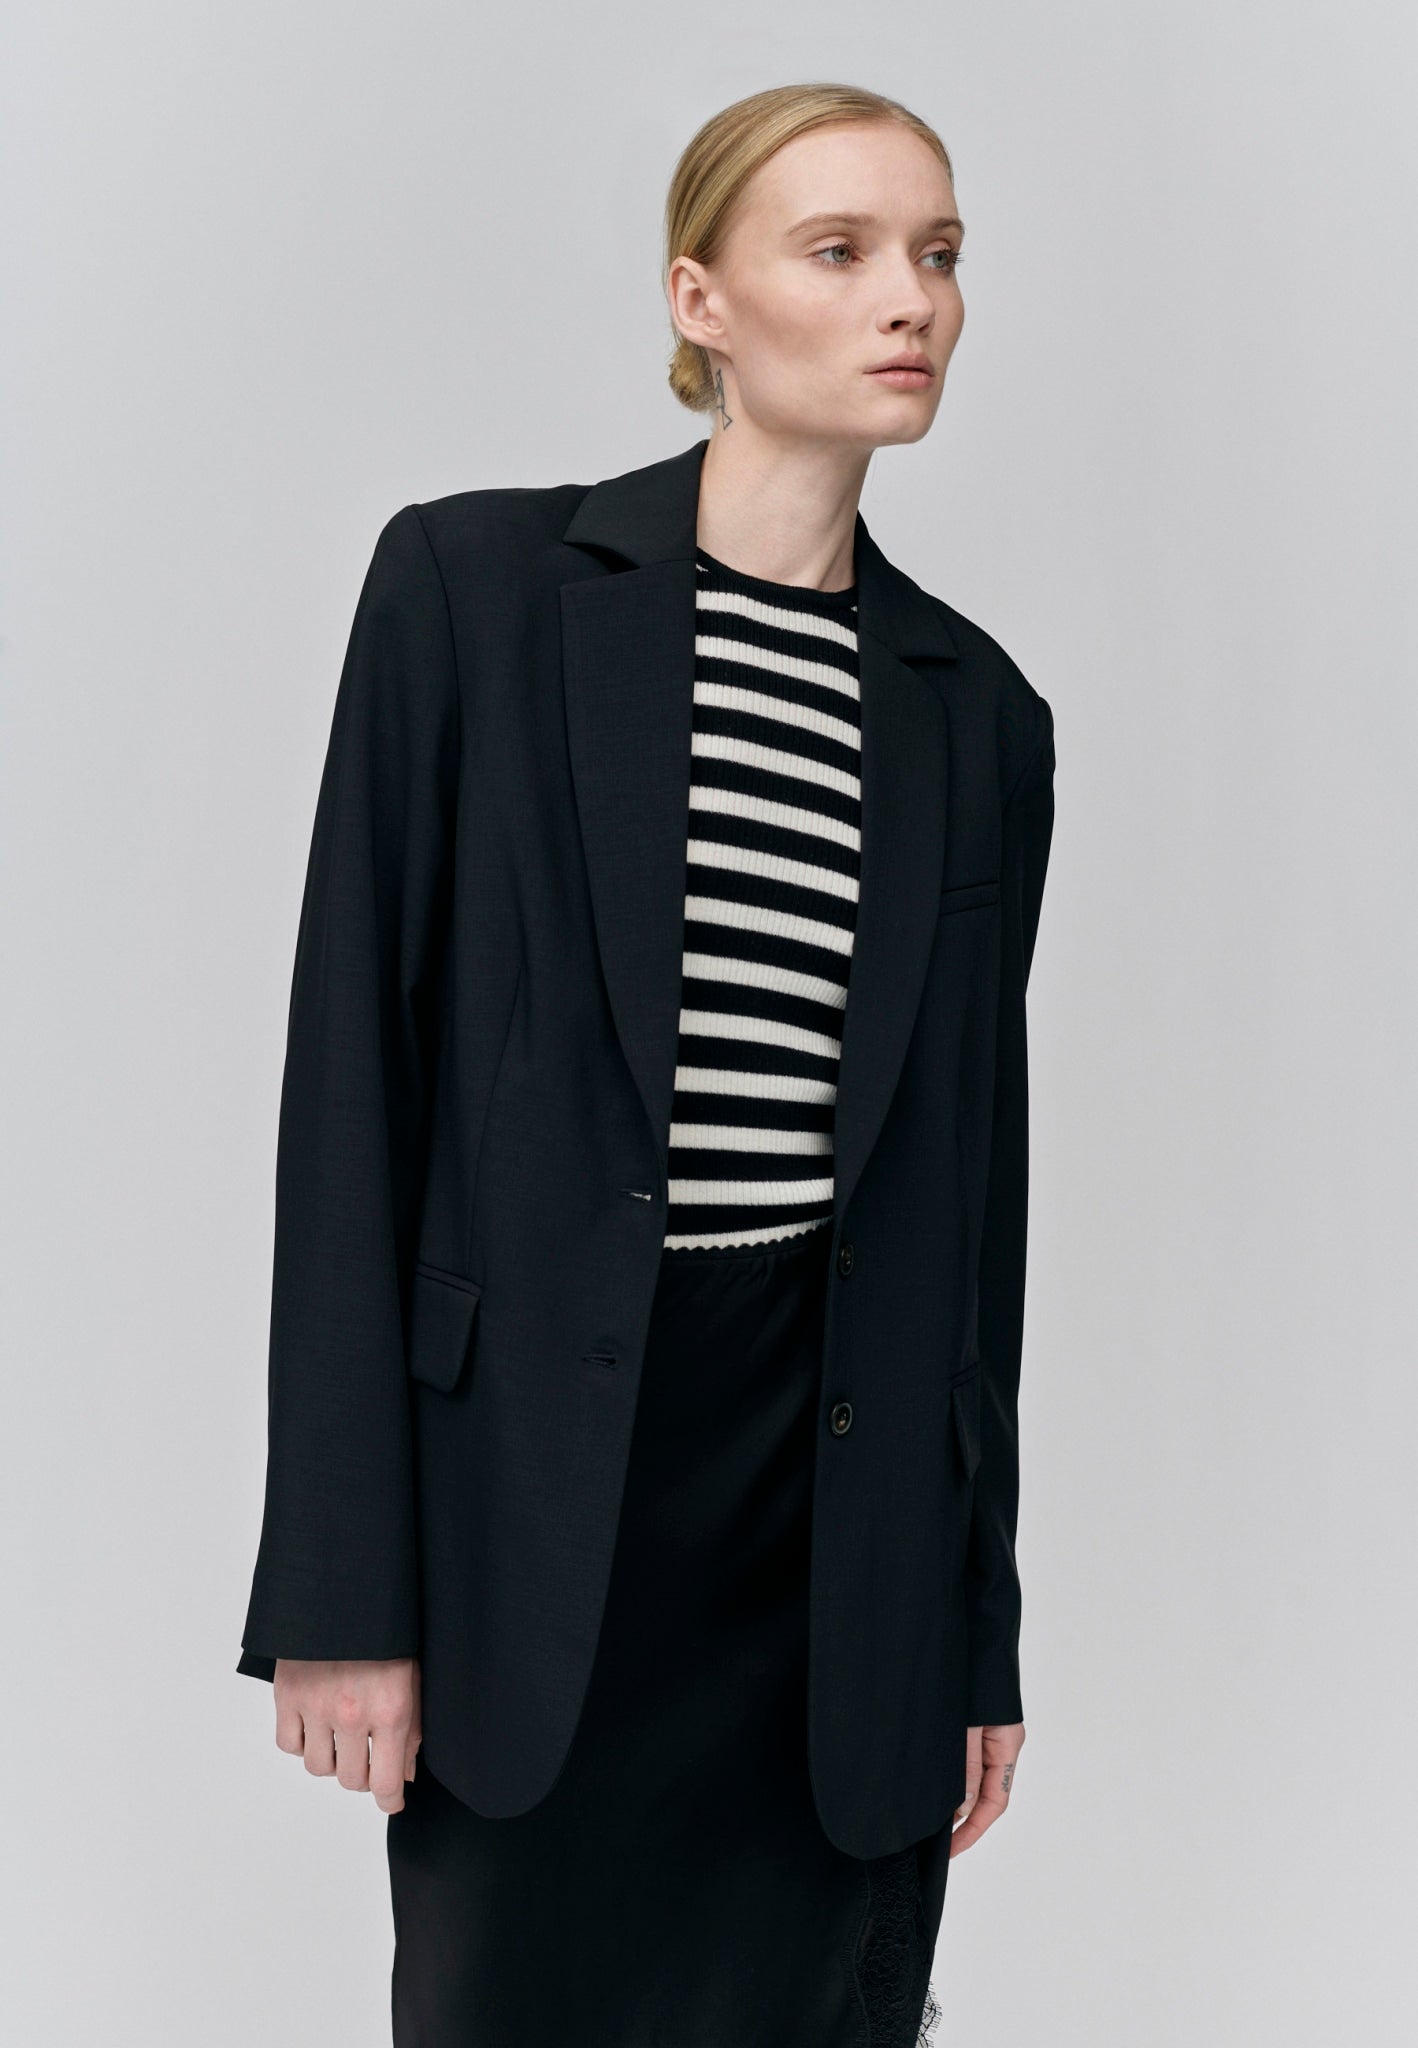 Birgitte Herskind - Jackets & Blazers - Shop Styles Here